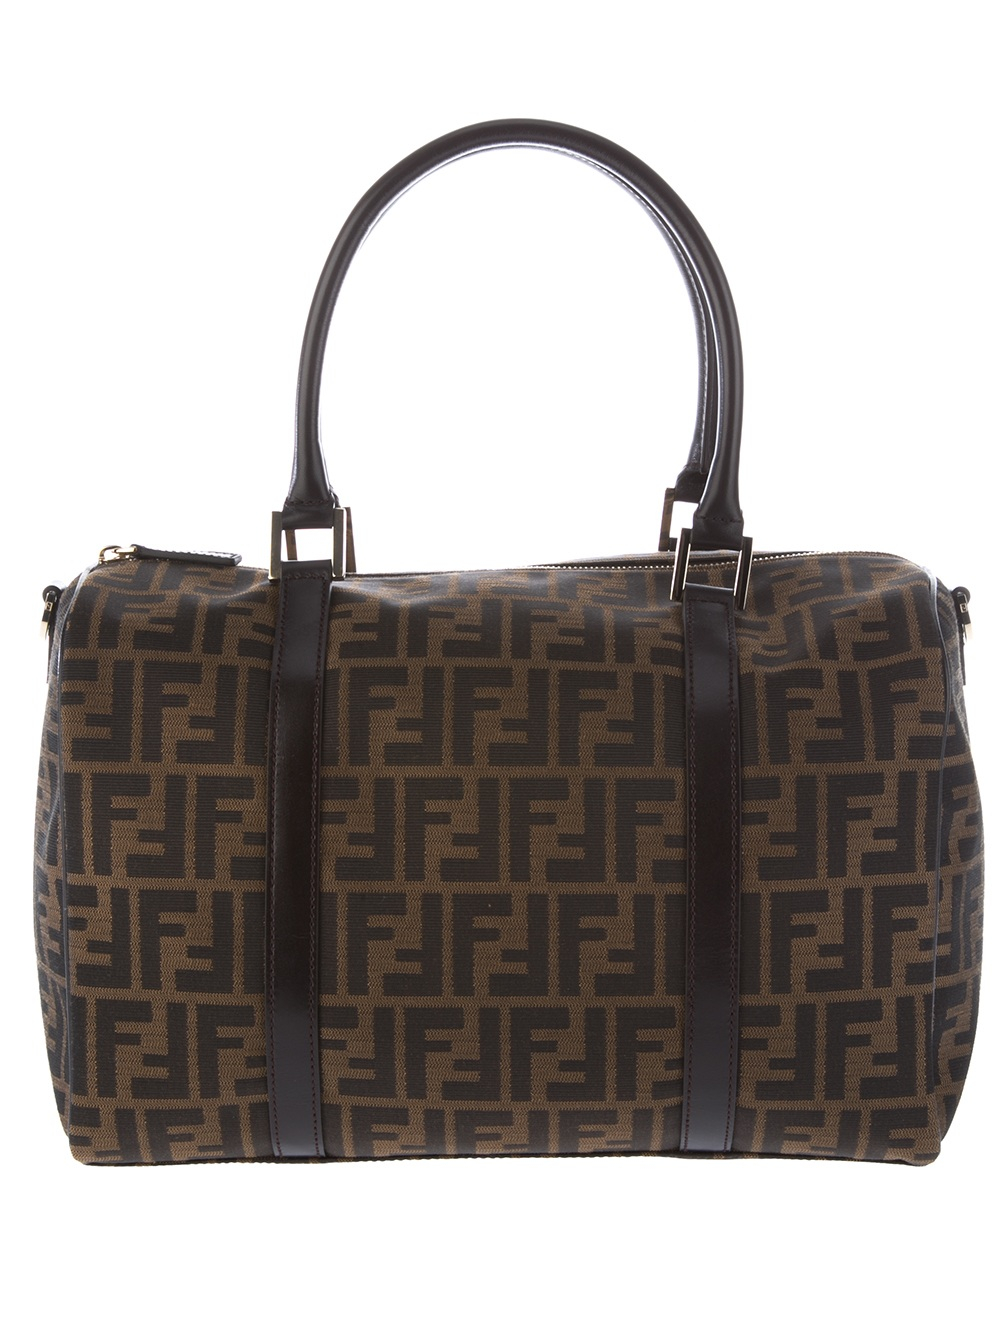 Fendi Logo Print Bag in Brown | Lyst